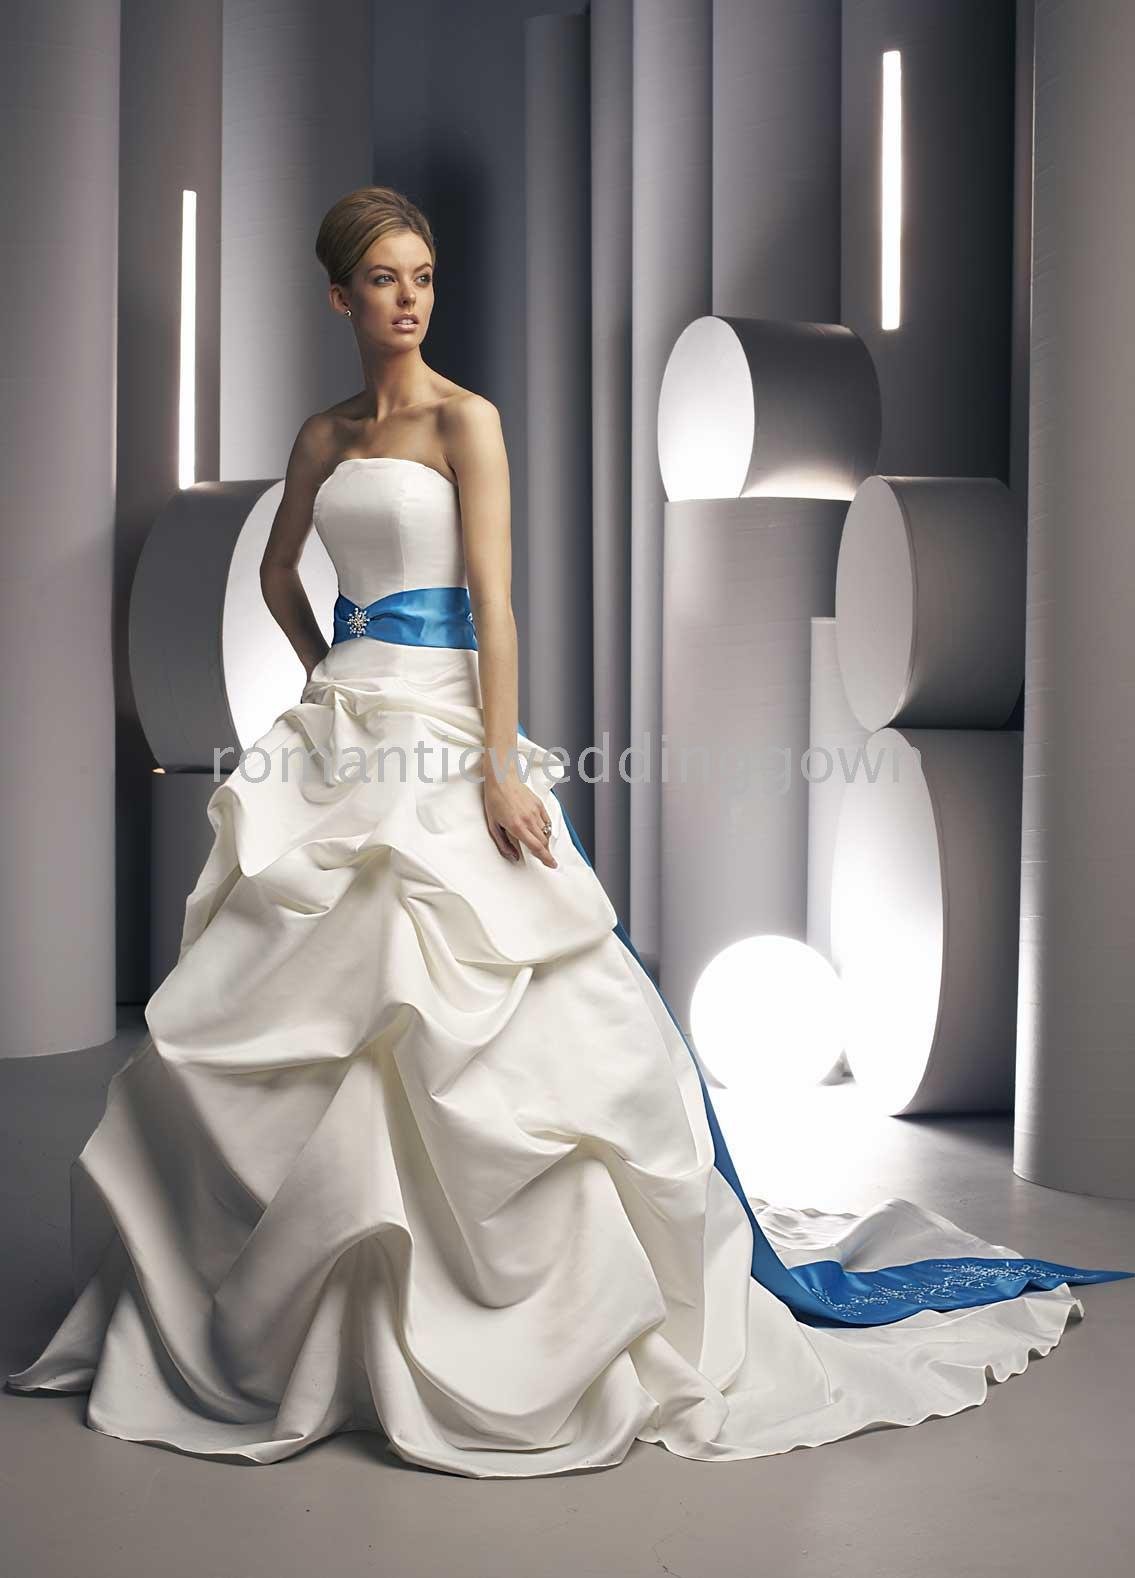 white and blue wedding dress